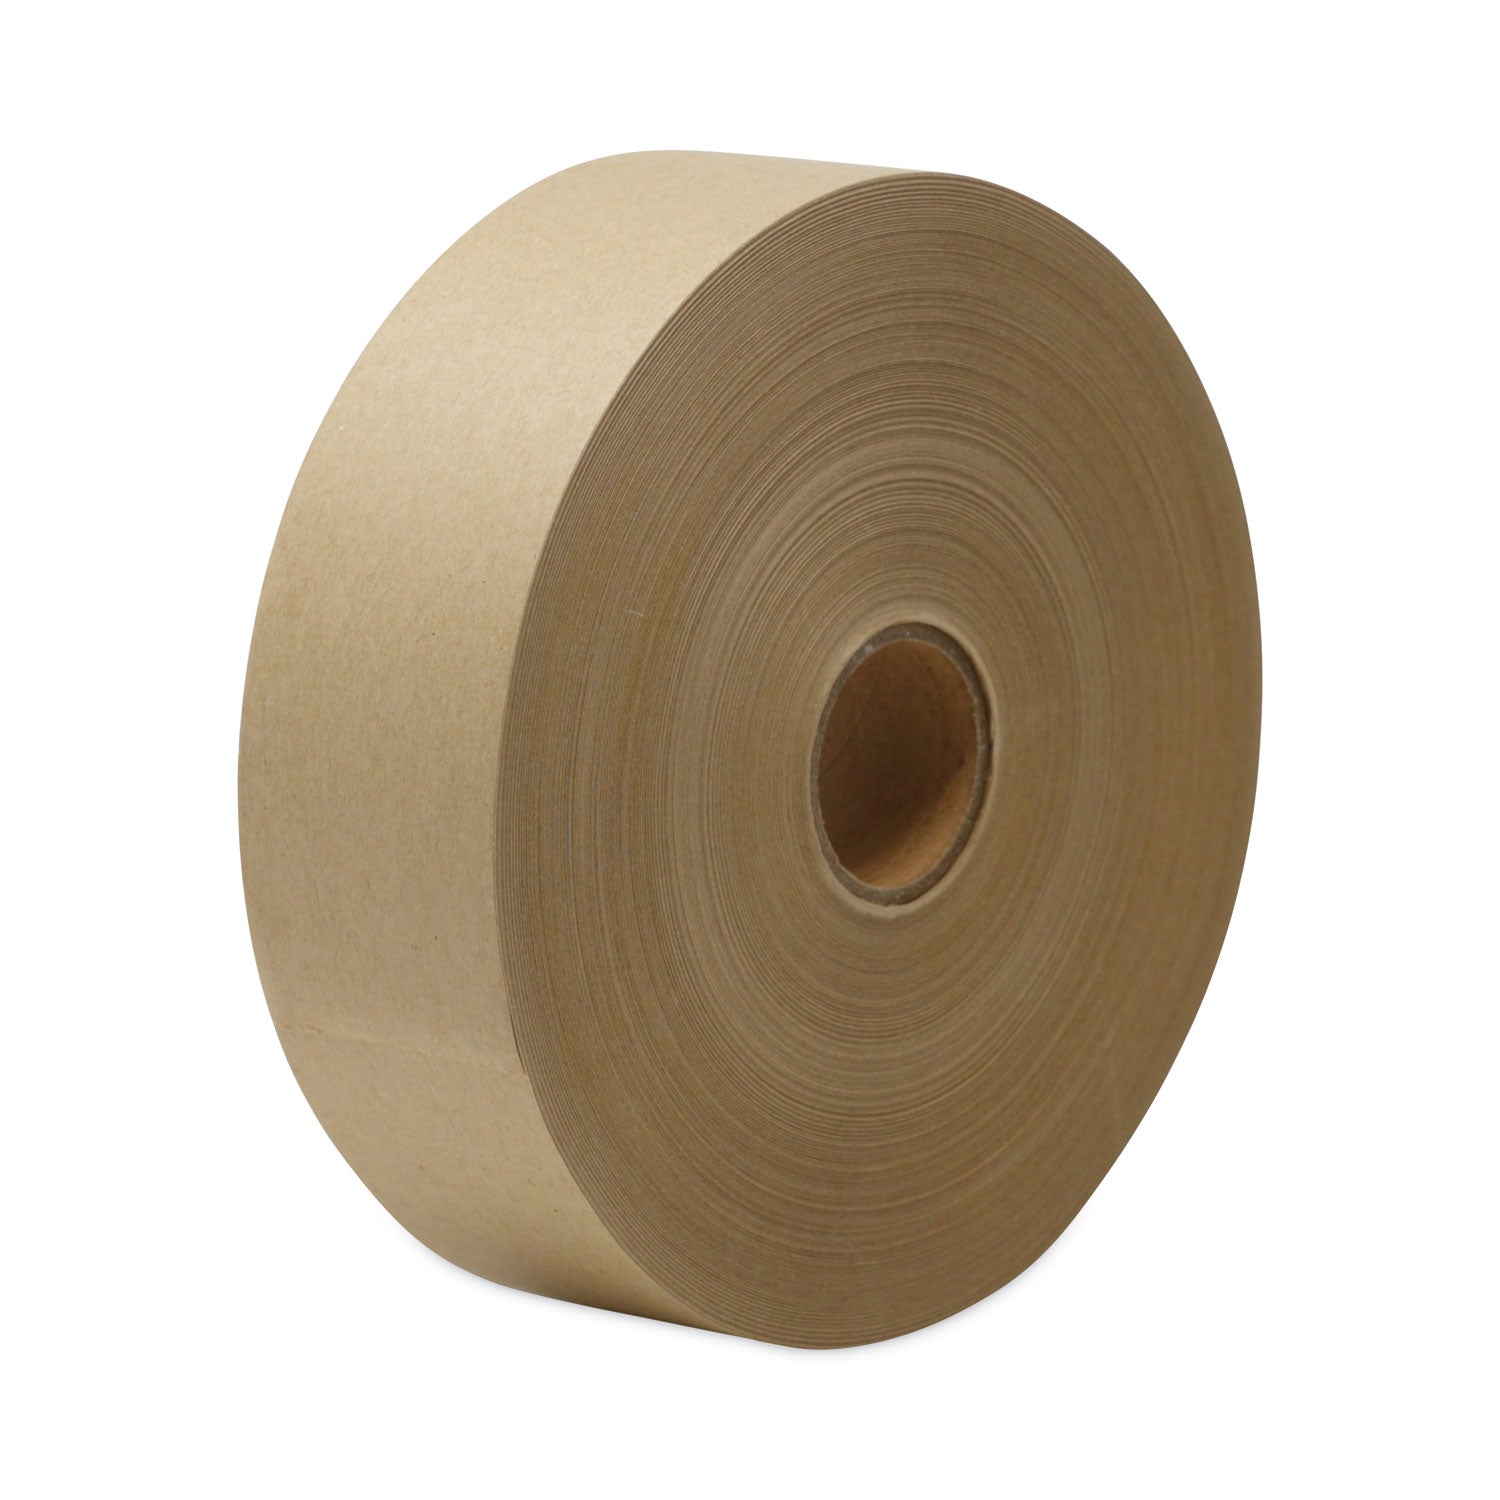 gummed-kraft-sealing-tape-3-core-2-x-600-ft-brown-12-carton_unv2163 - 1